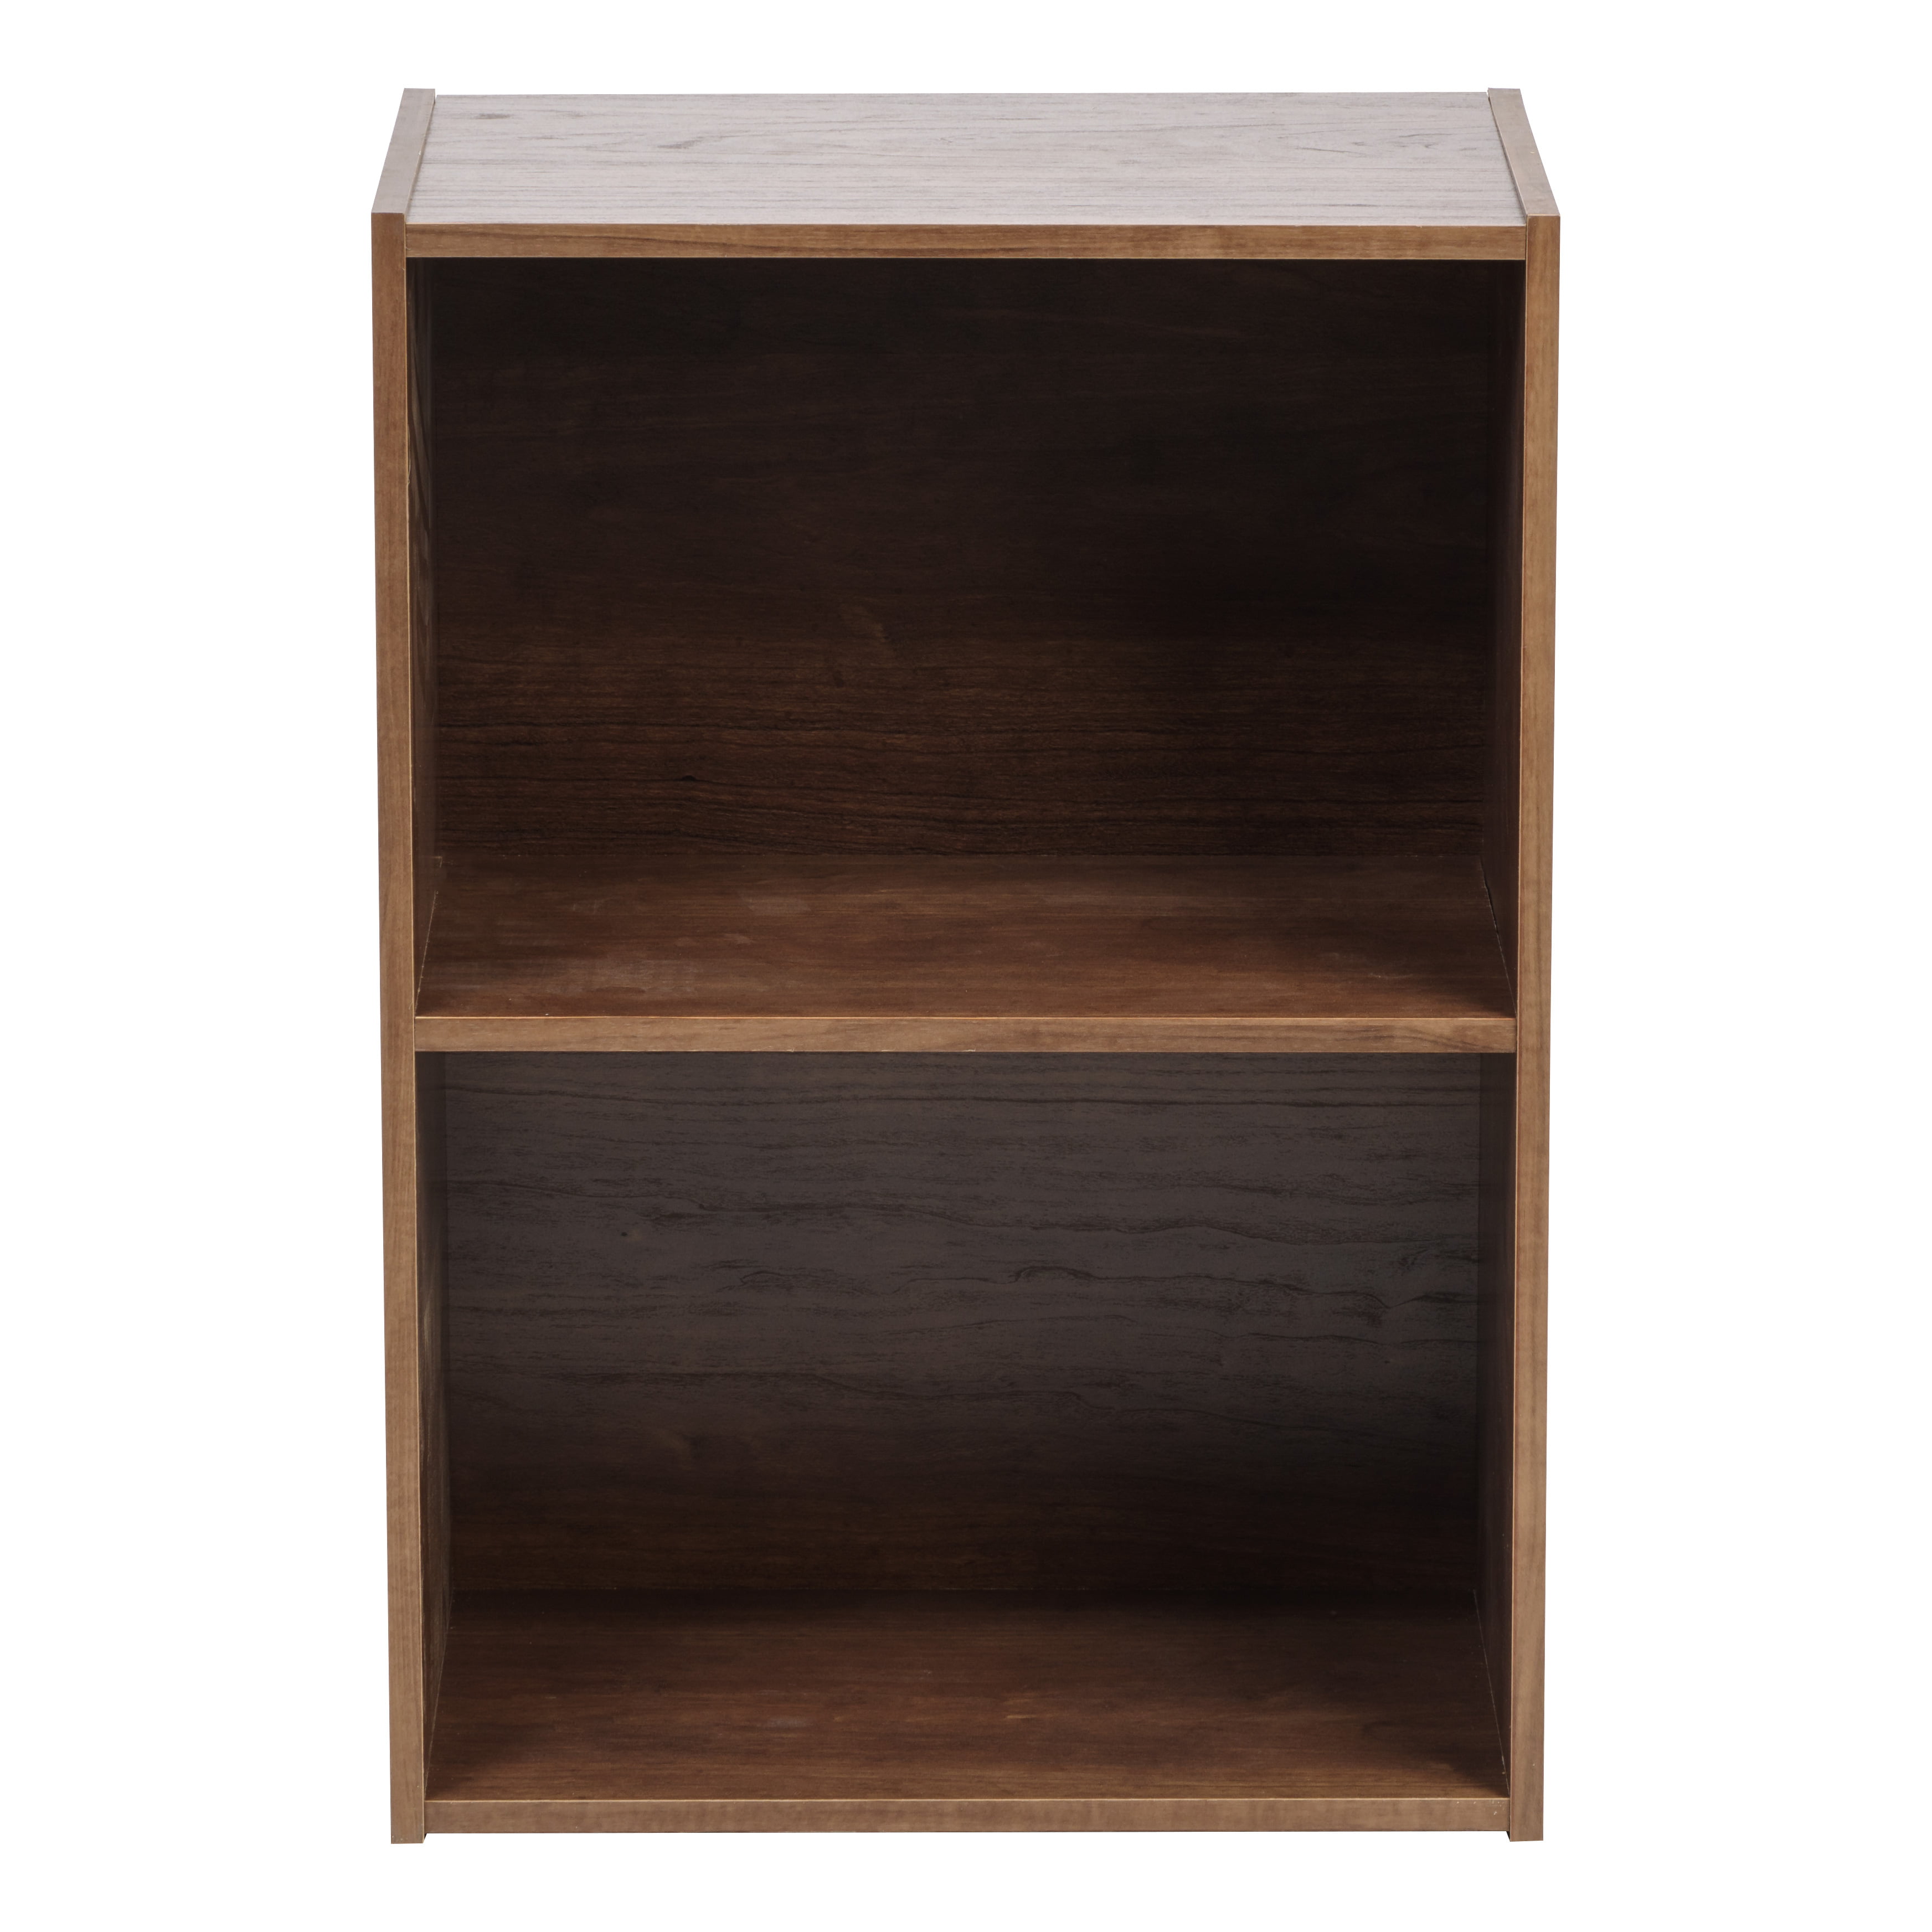 IRIS 2 Tier Wood Storage Shelf Brown/White